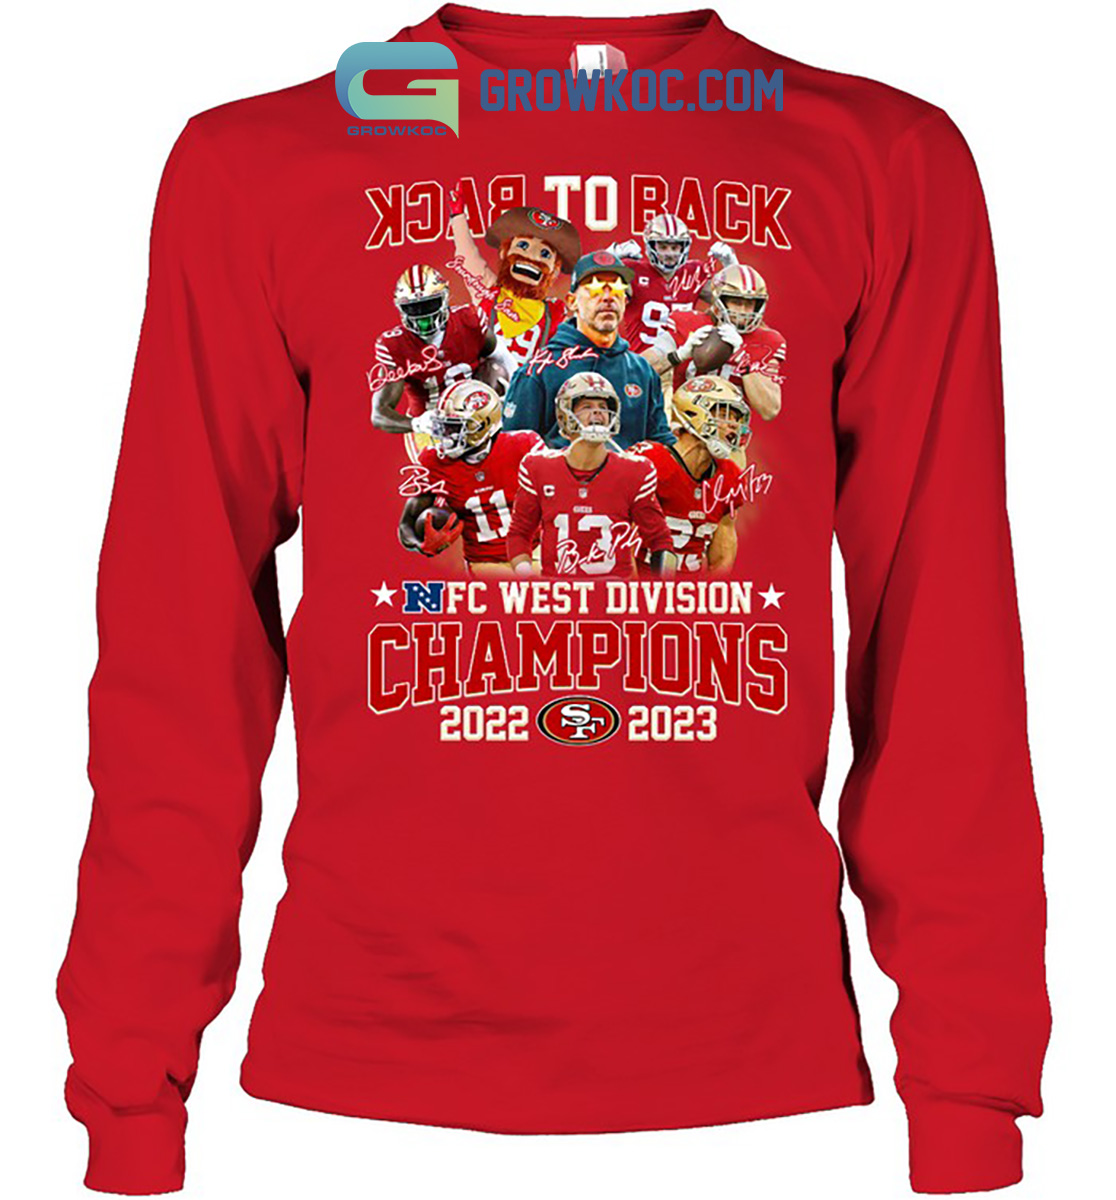 2023 NFC West Divison Champions SF San Francisco 49ers Hoodie Shirts -  Growkoc